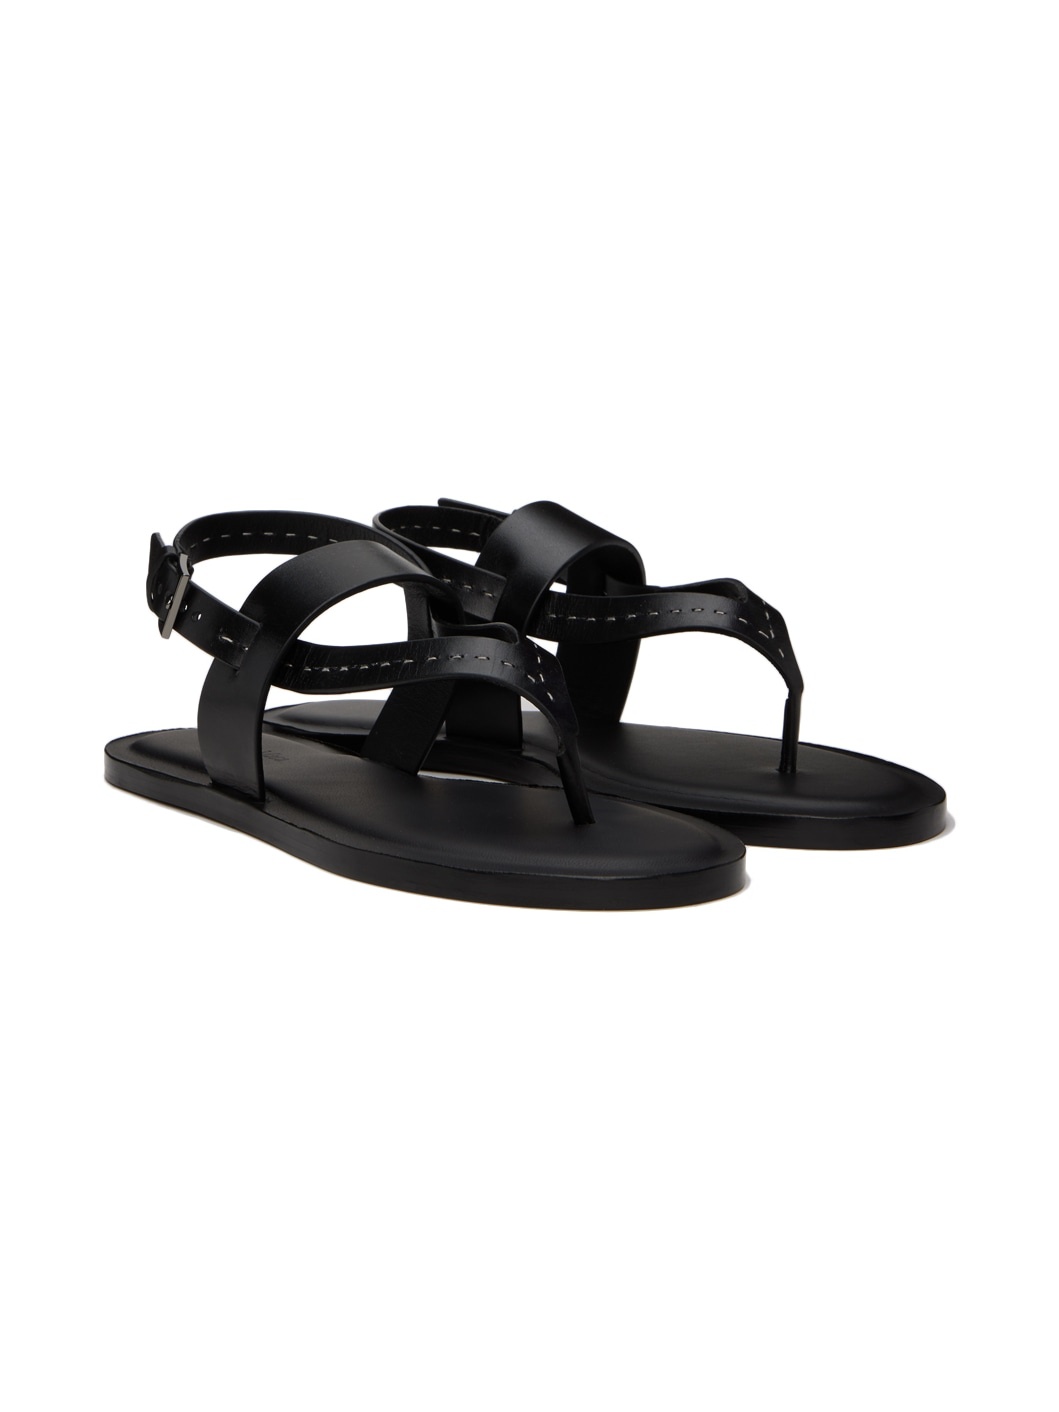 Black Thongstitch Sandals - 4